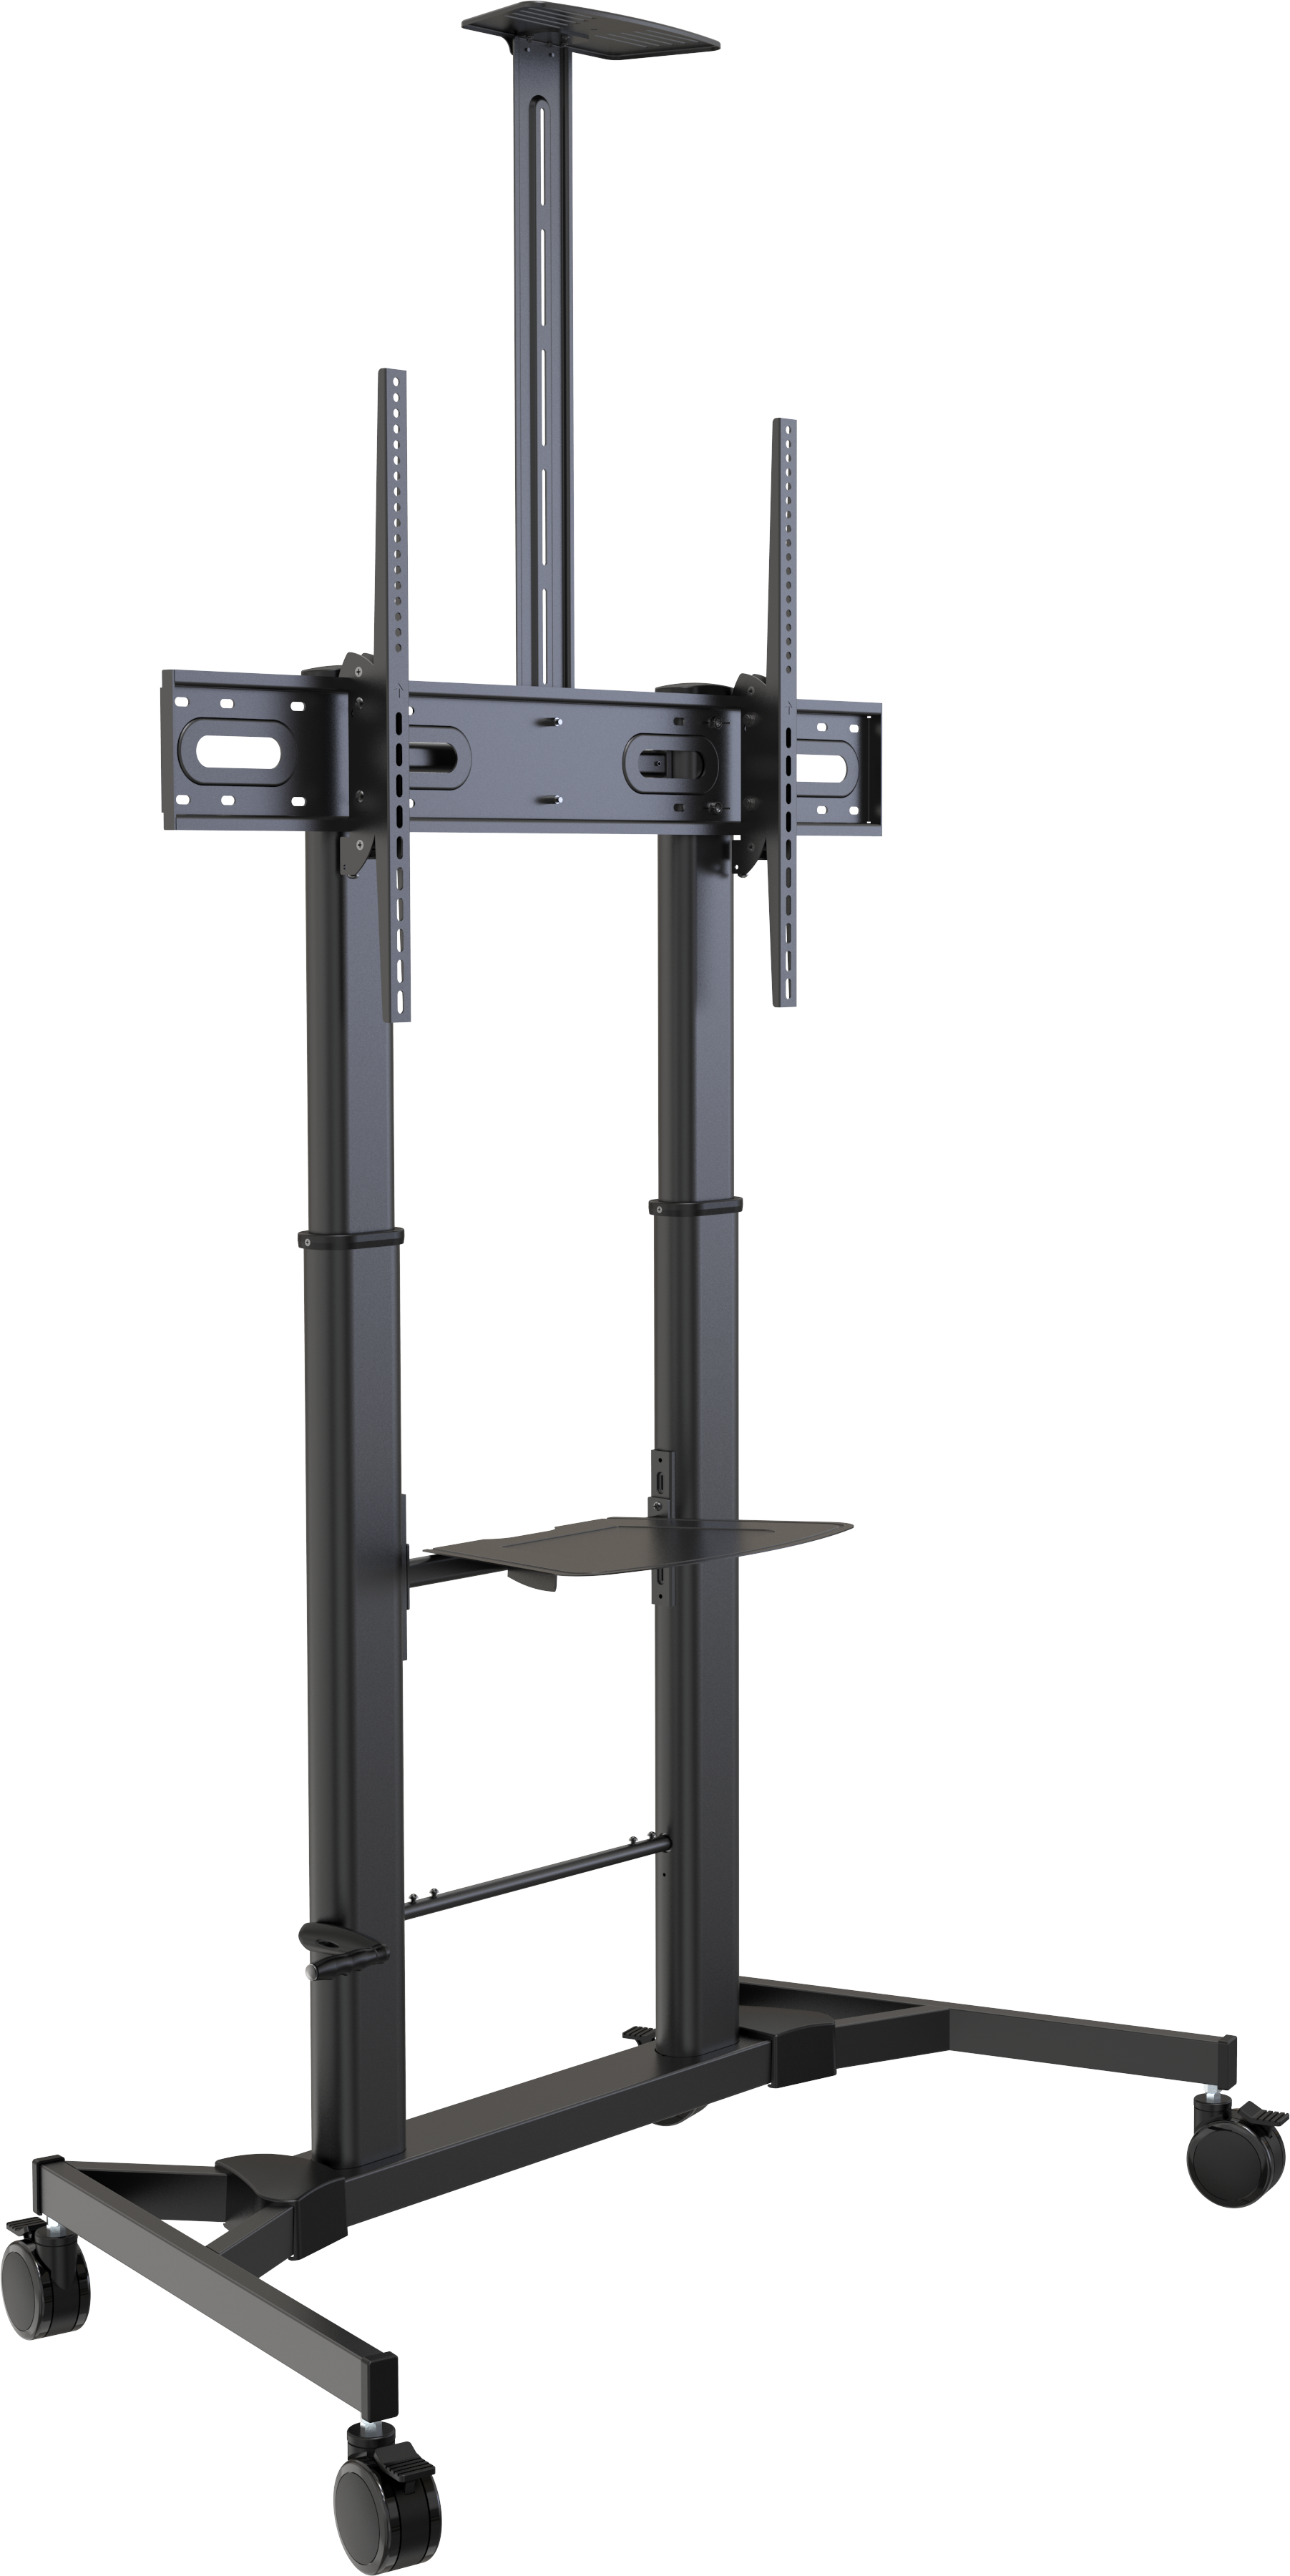 An image showing Carro para pantallas ajustable en altura para 80 kg